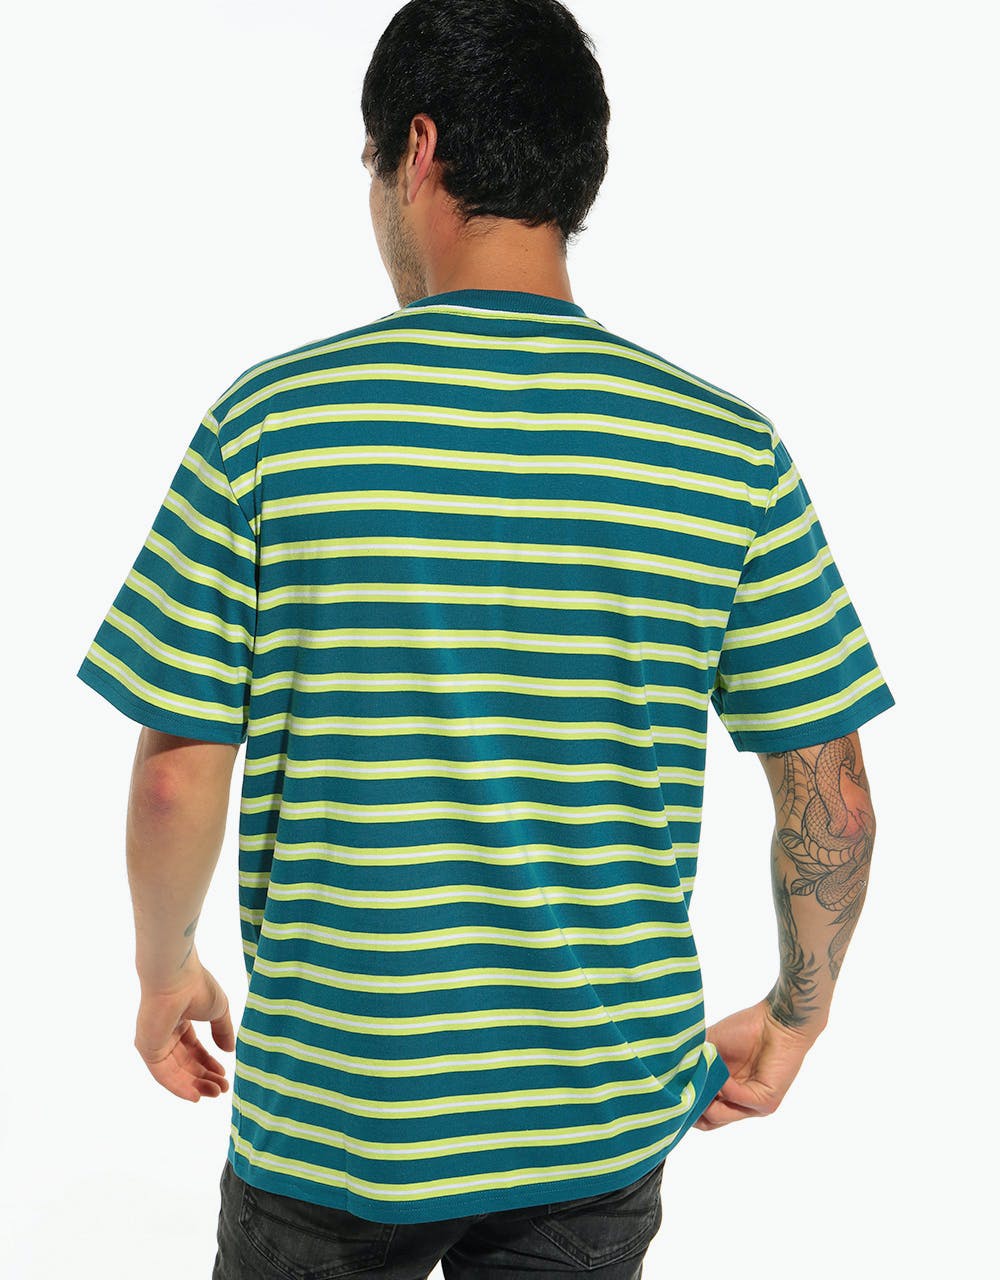 Carhartt WIP S/S Oakland T-Shirt - Moody Blue/Lime Stripe